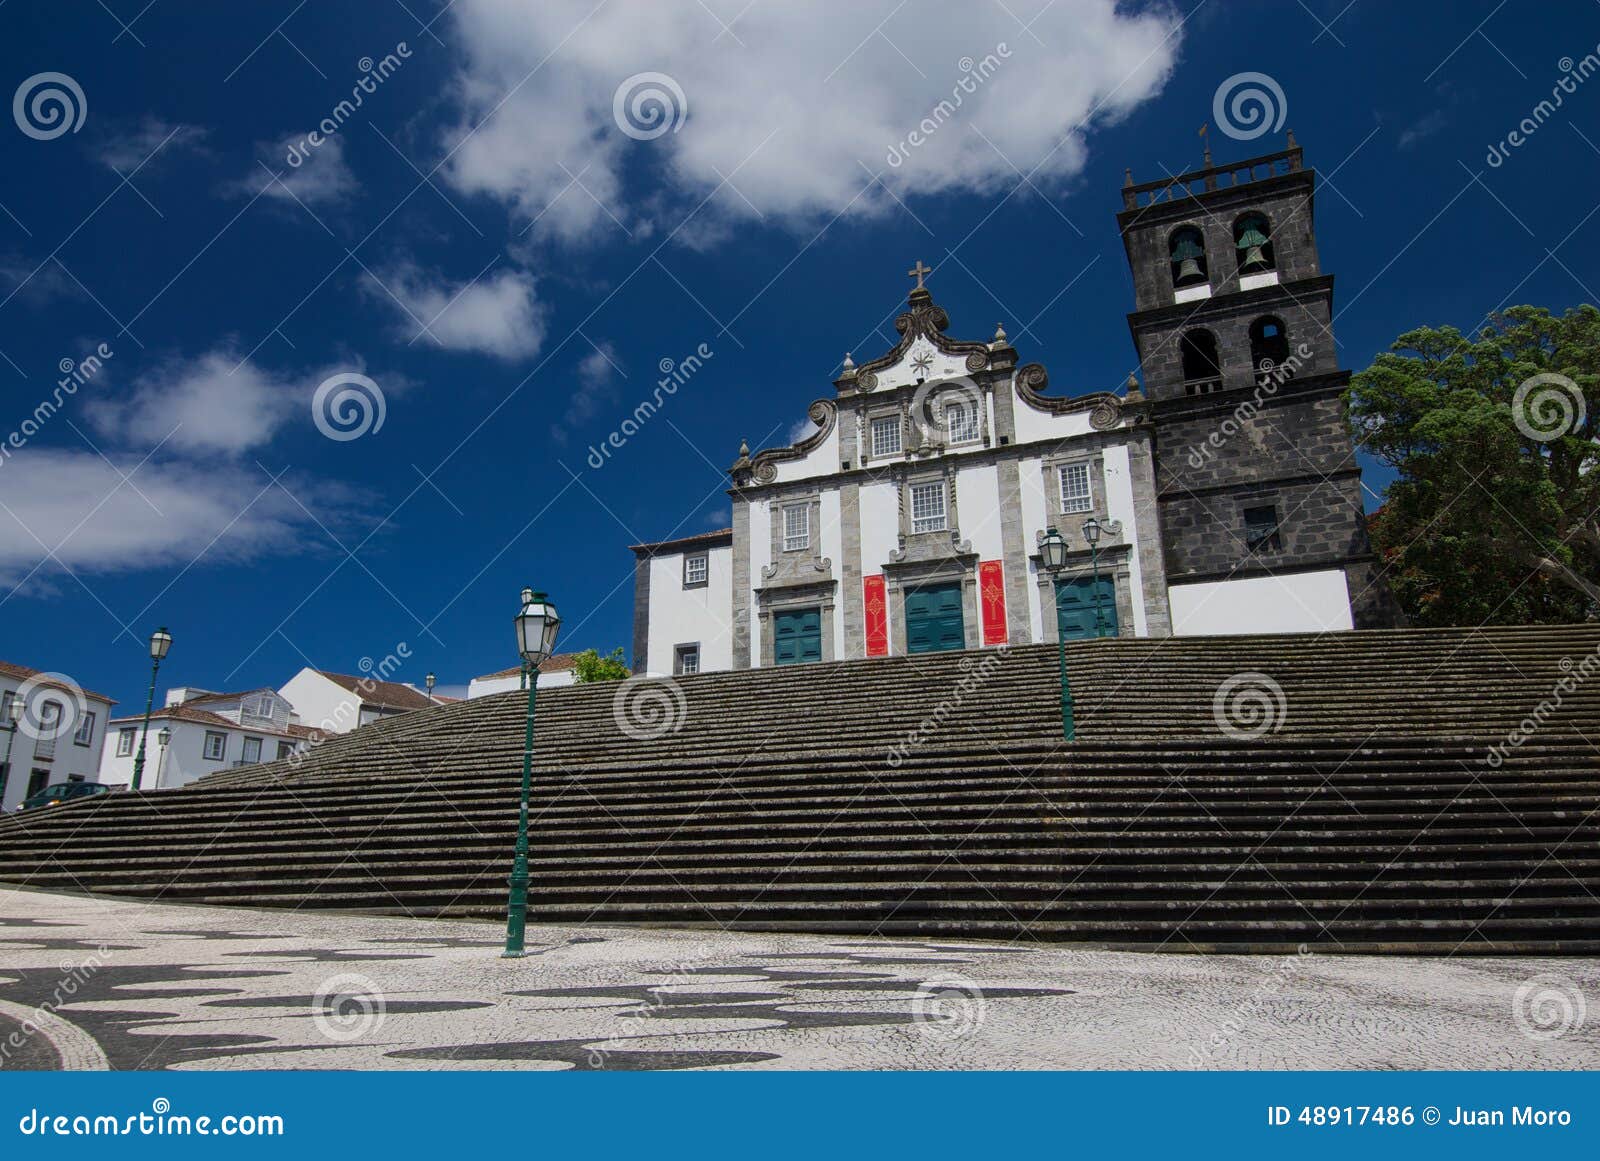 ribeira grande town hall, sao miguel island azores, portugal